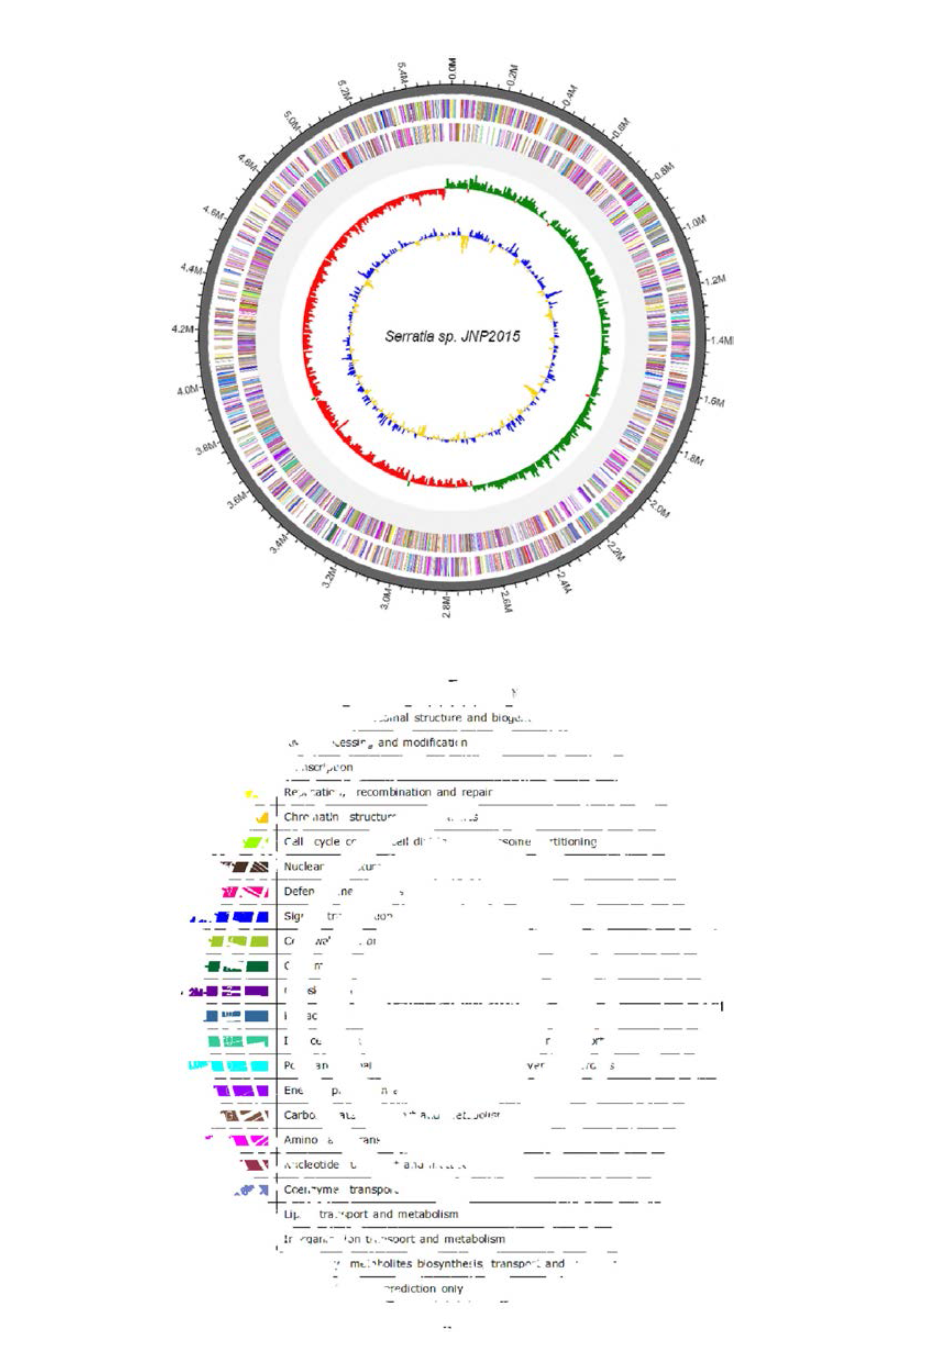 Serratia sp. JNP2015의 COG analysis 결과